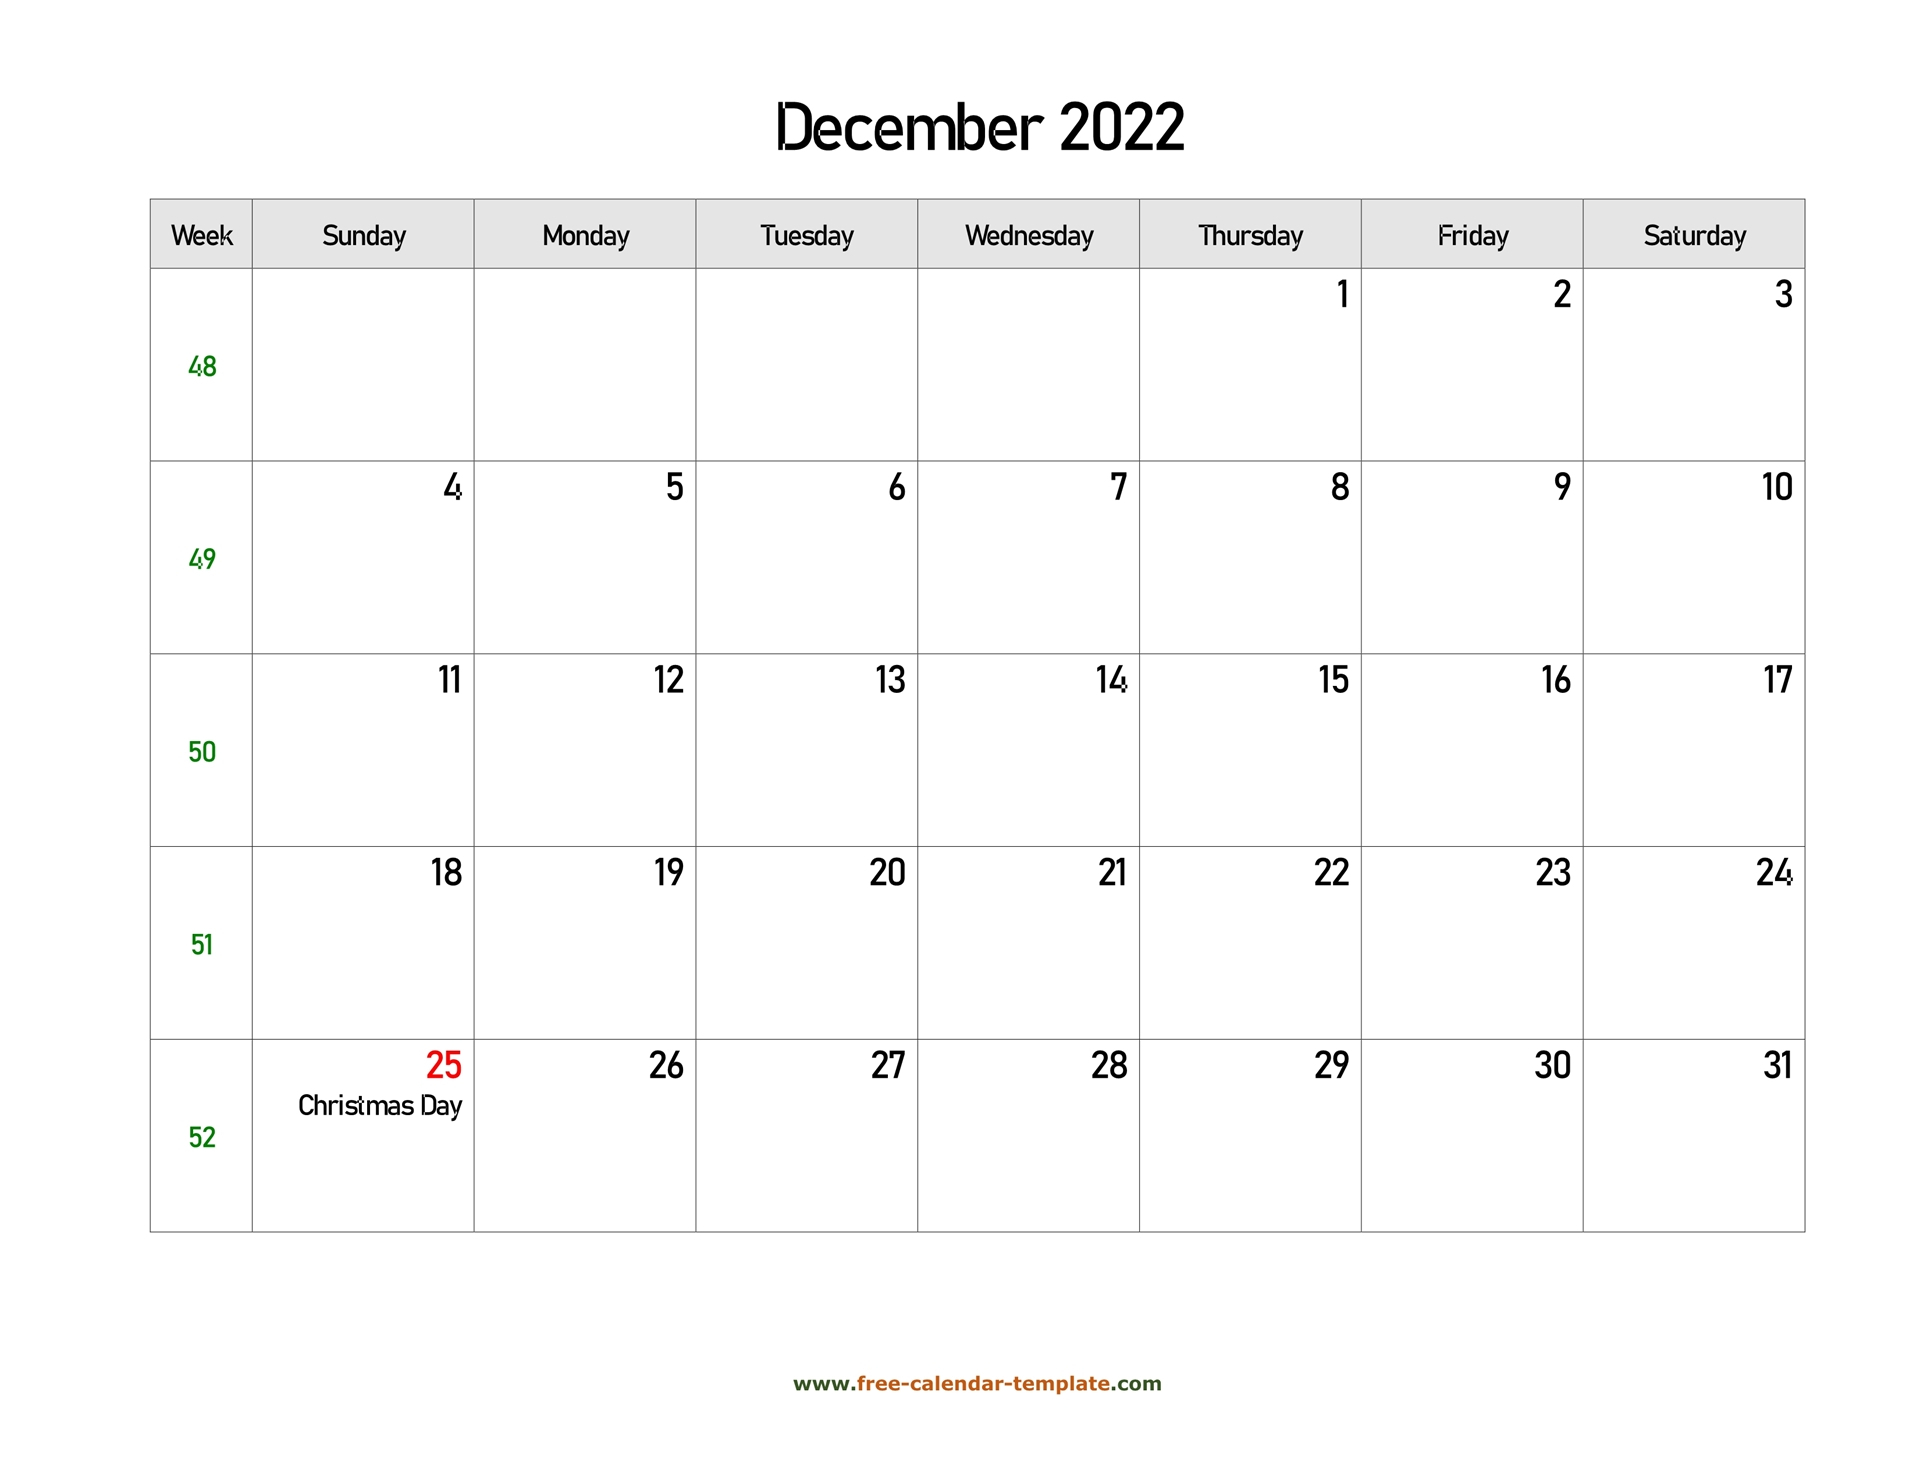 Get Calendar December And January 2022